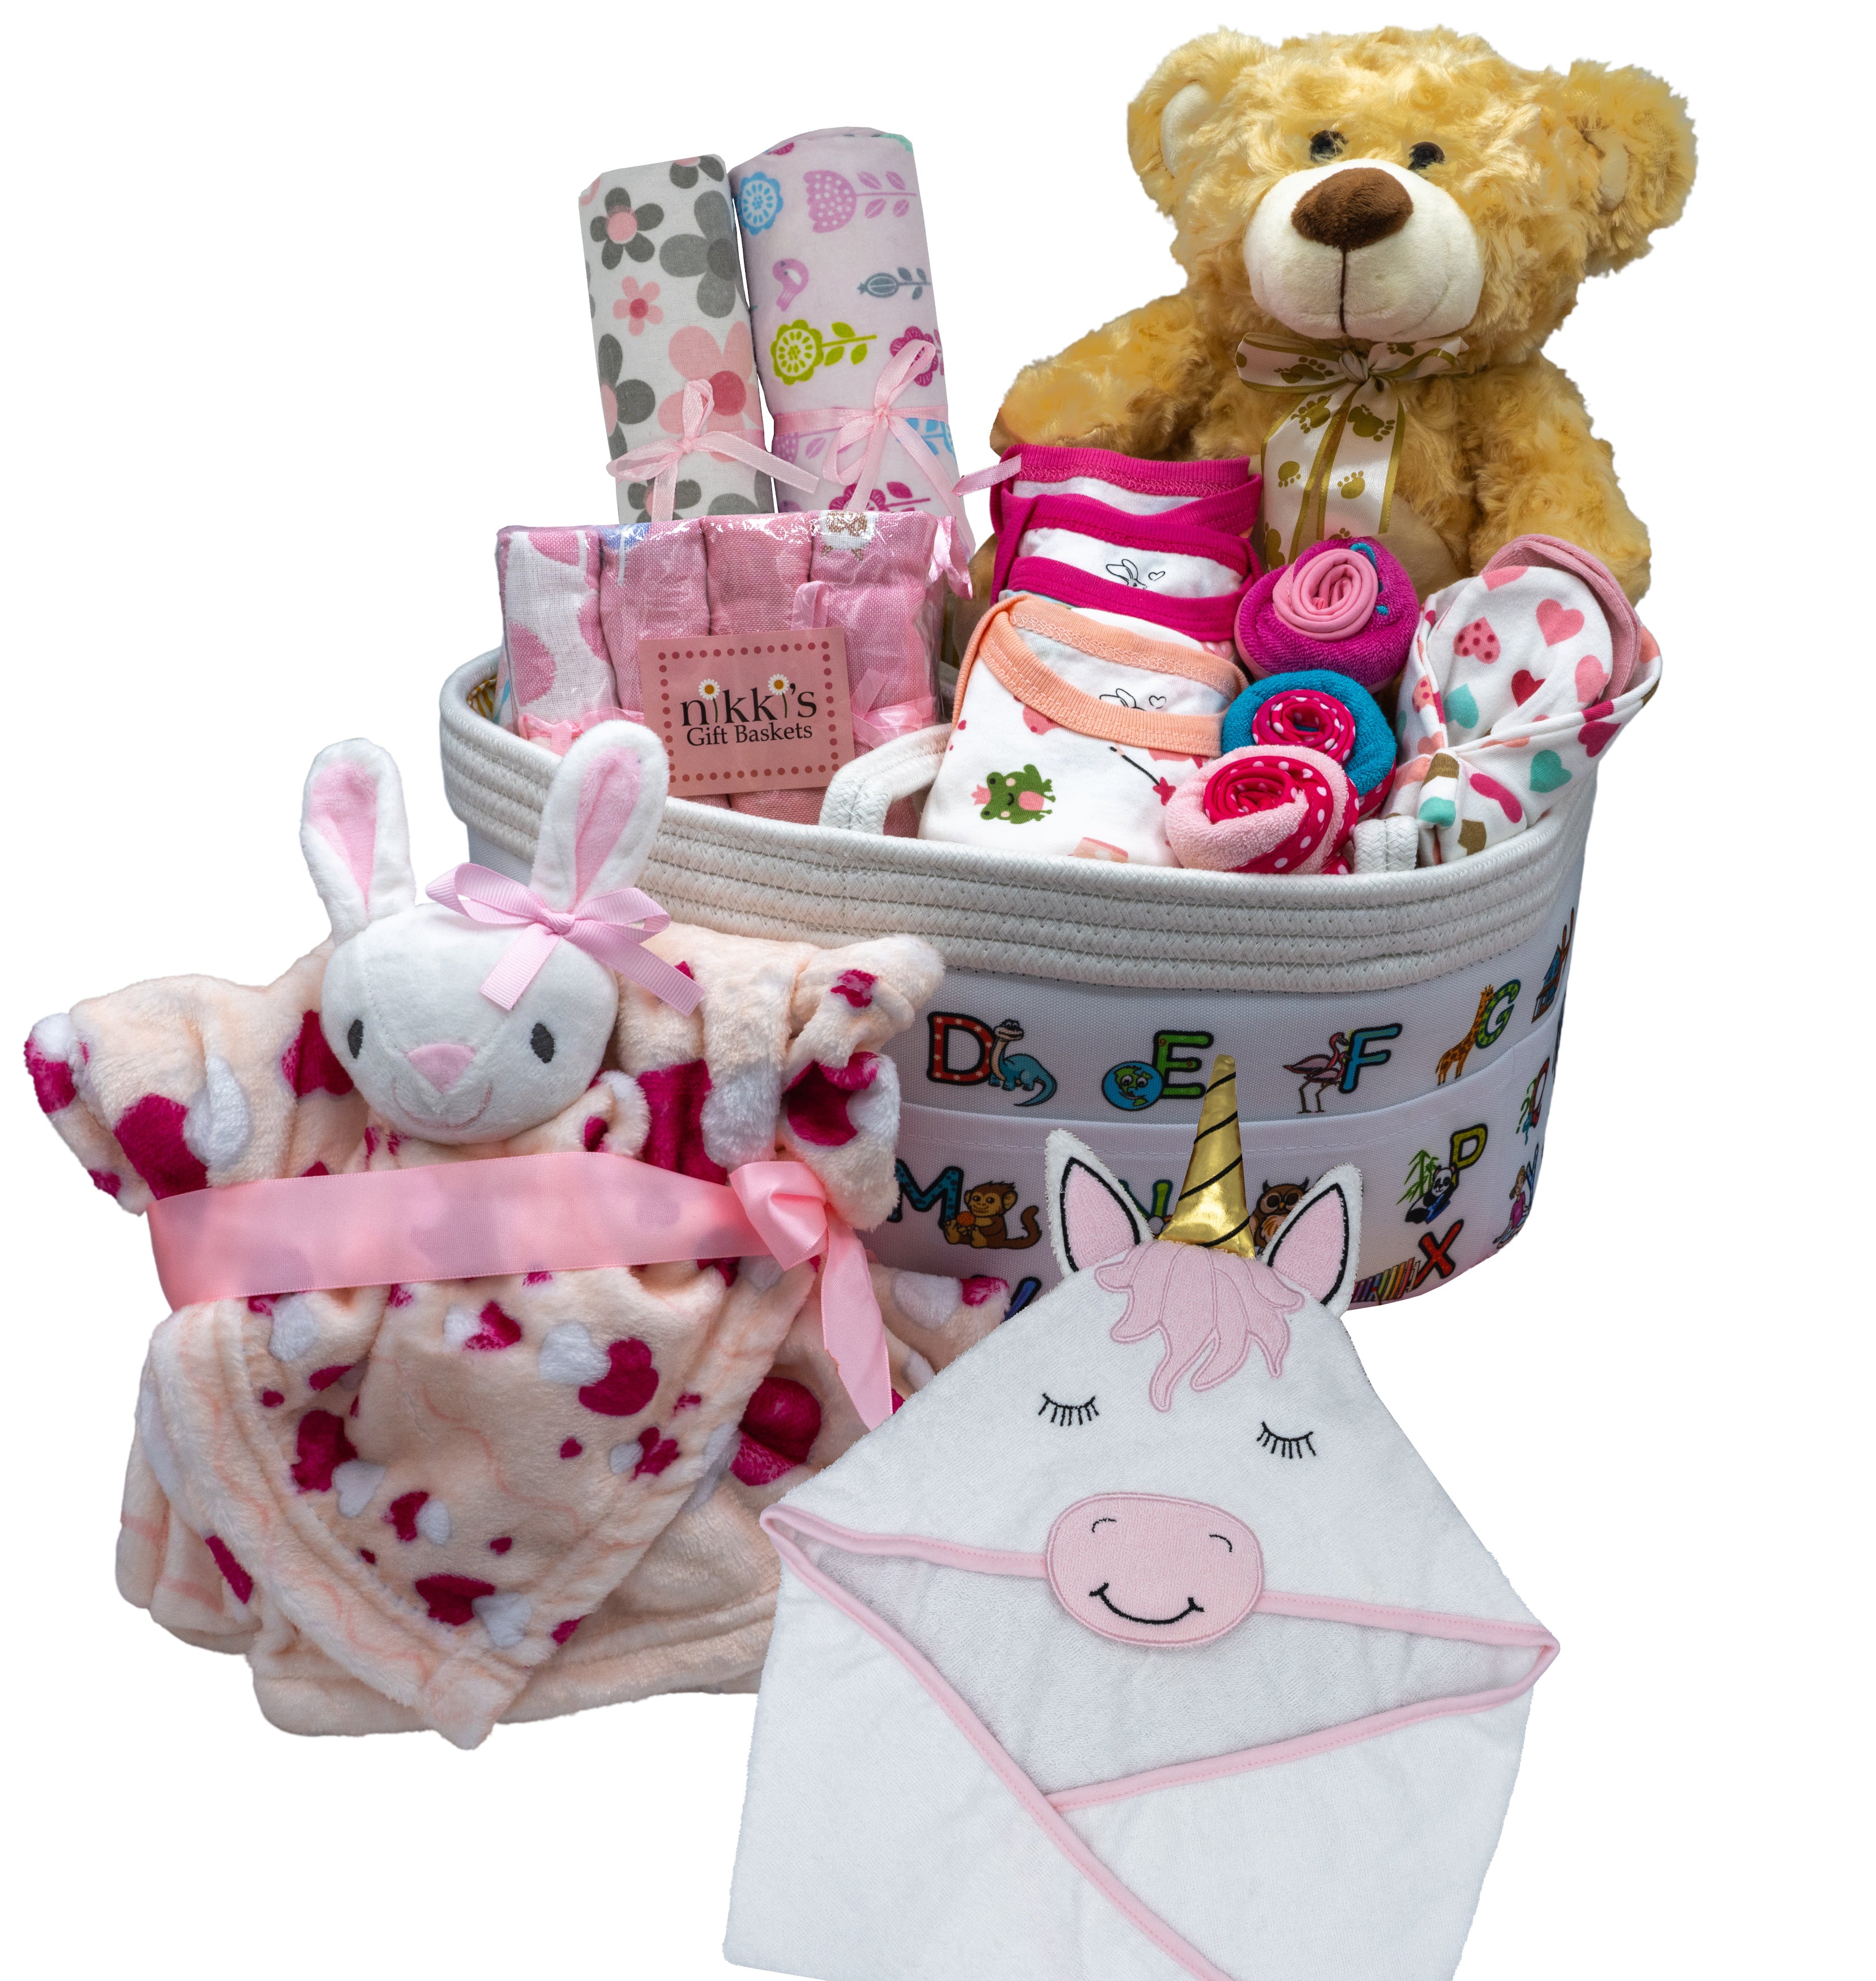 Simply Baby Necessities Gift Basket in Blue | eBay